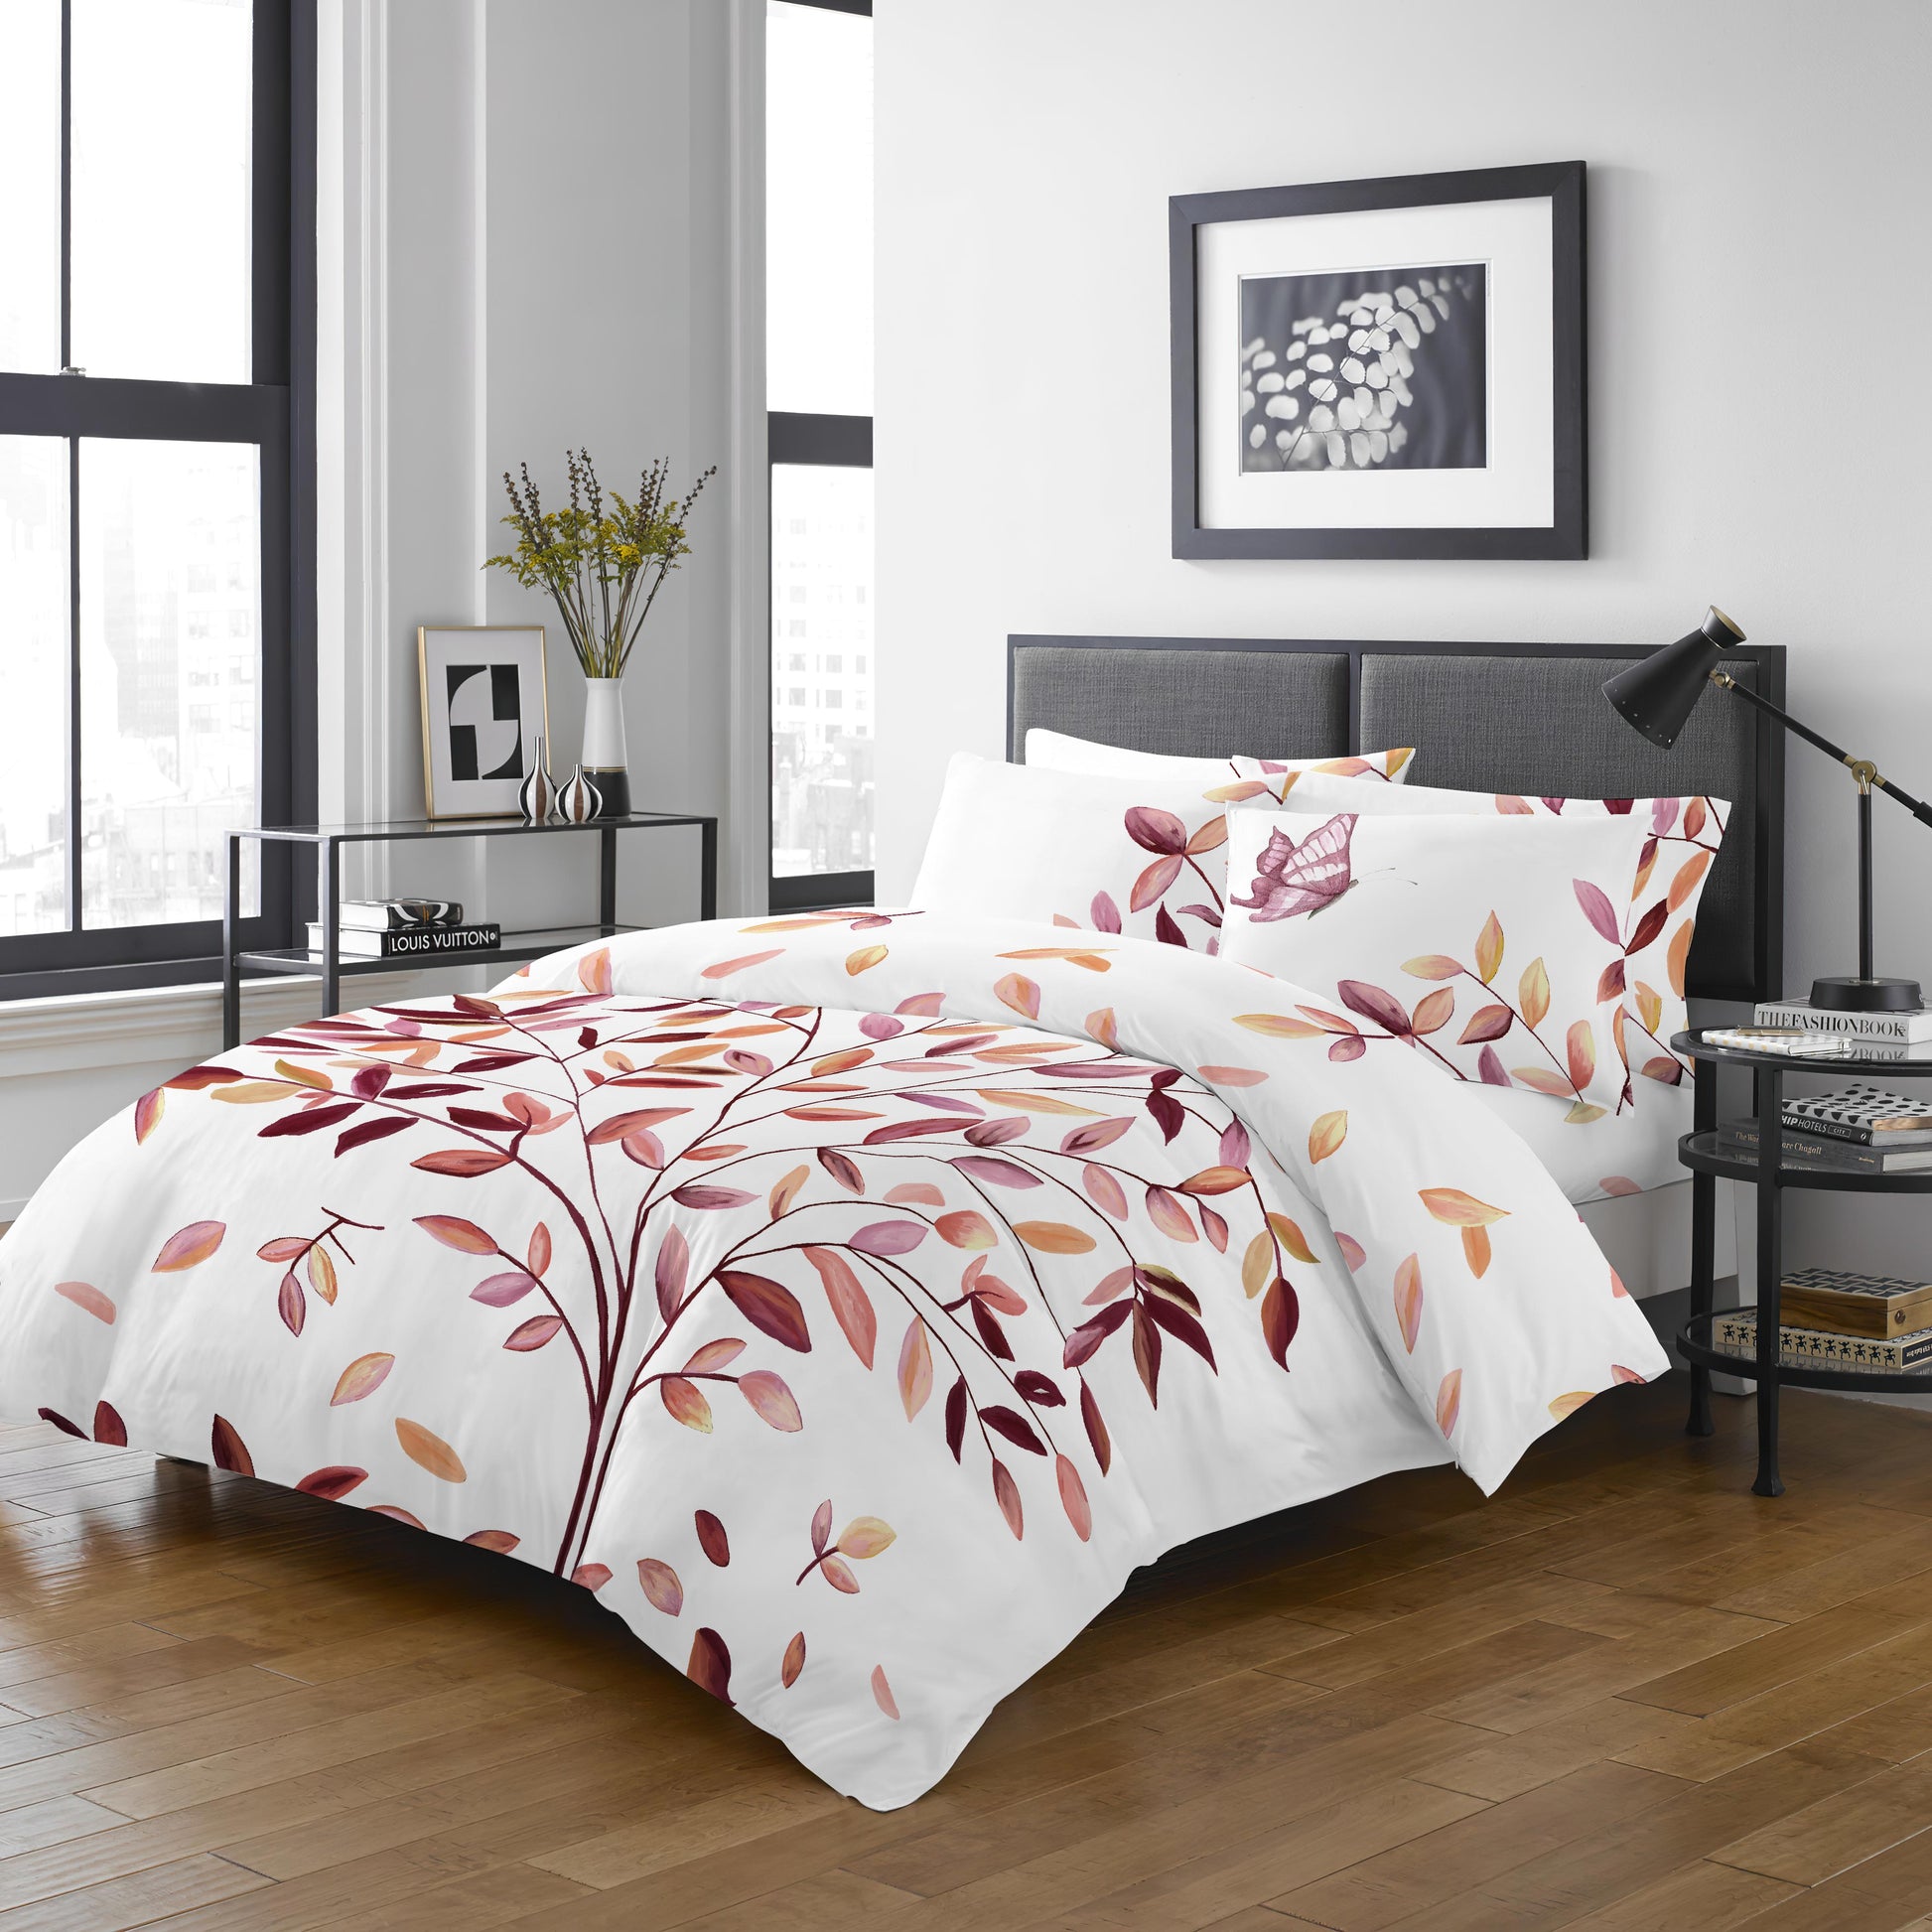 Louis Vuitton bed set 1  Designer bed sheets, Bed linens luxury